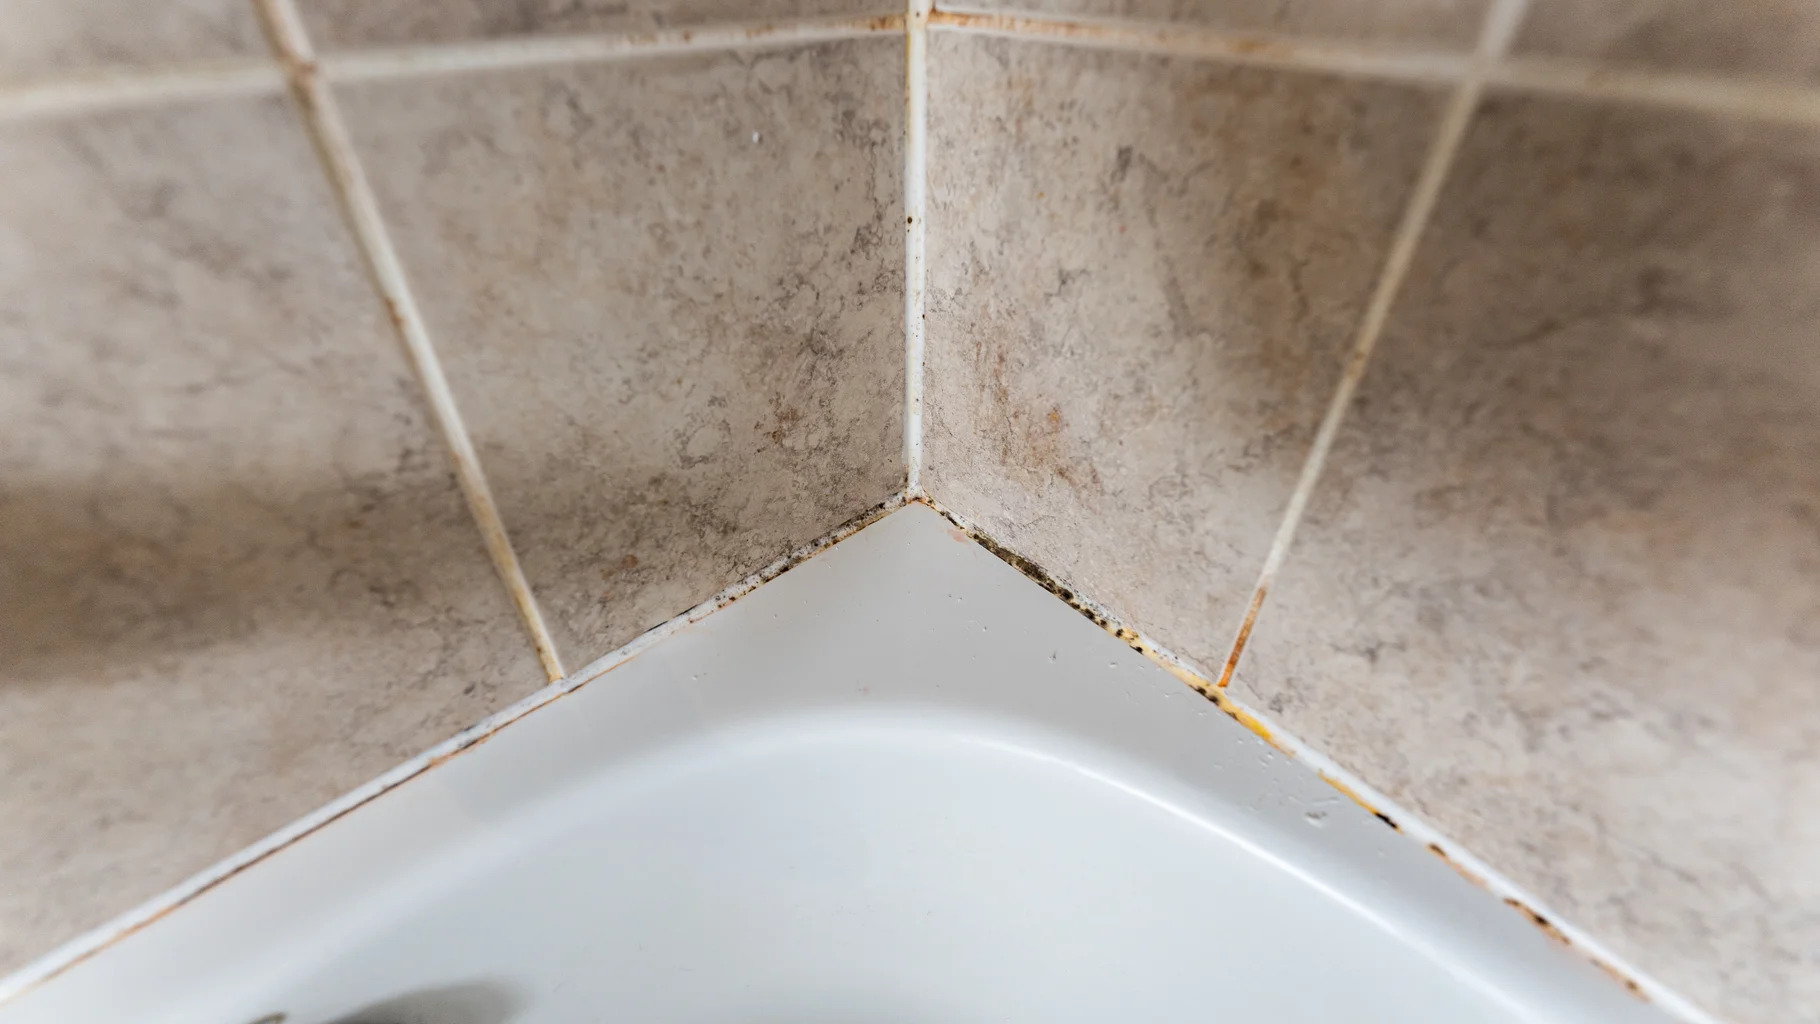 How To Remove Mold From Bathtub Caulk